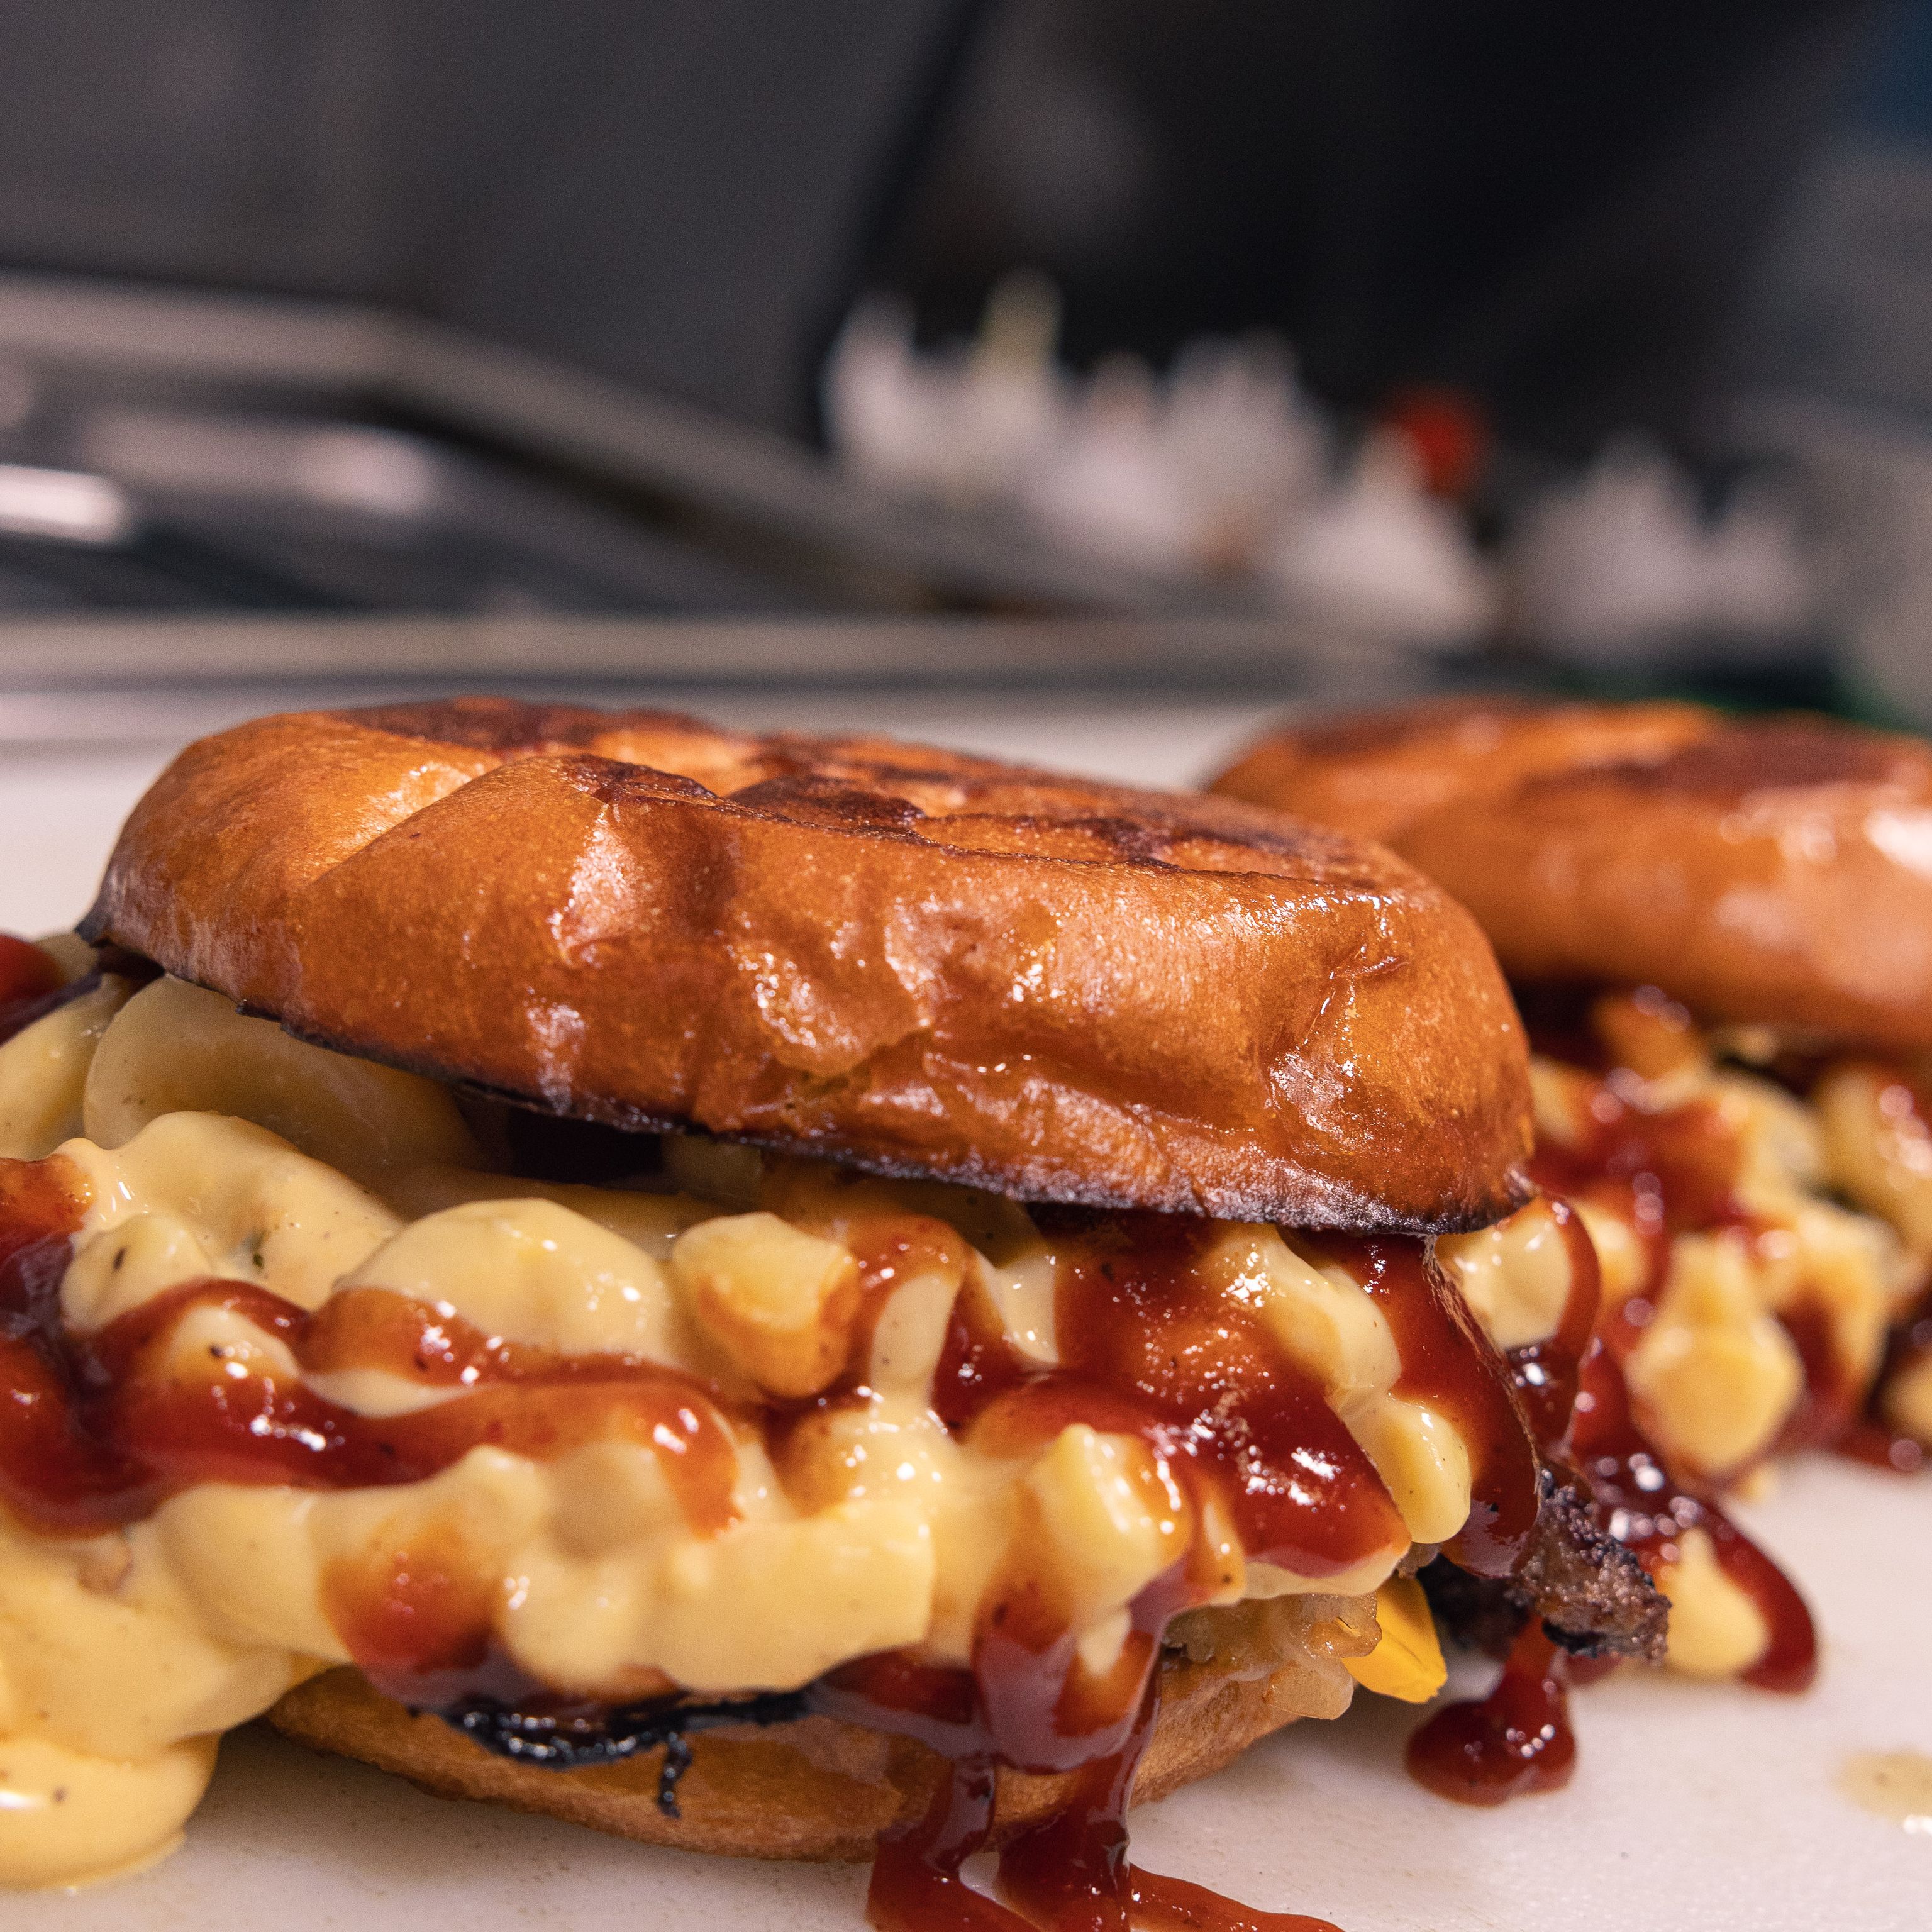 Mac and Cheese Burger - Original Slap burger